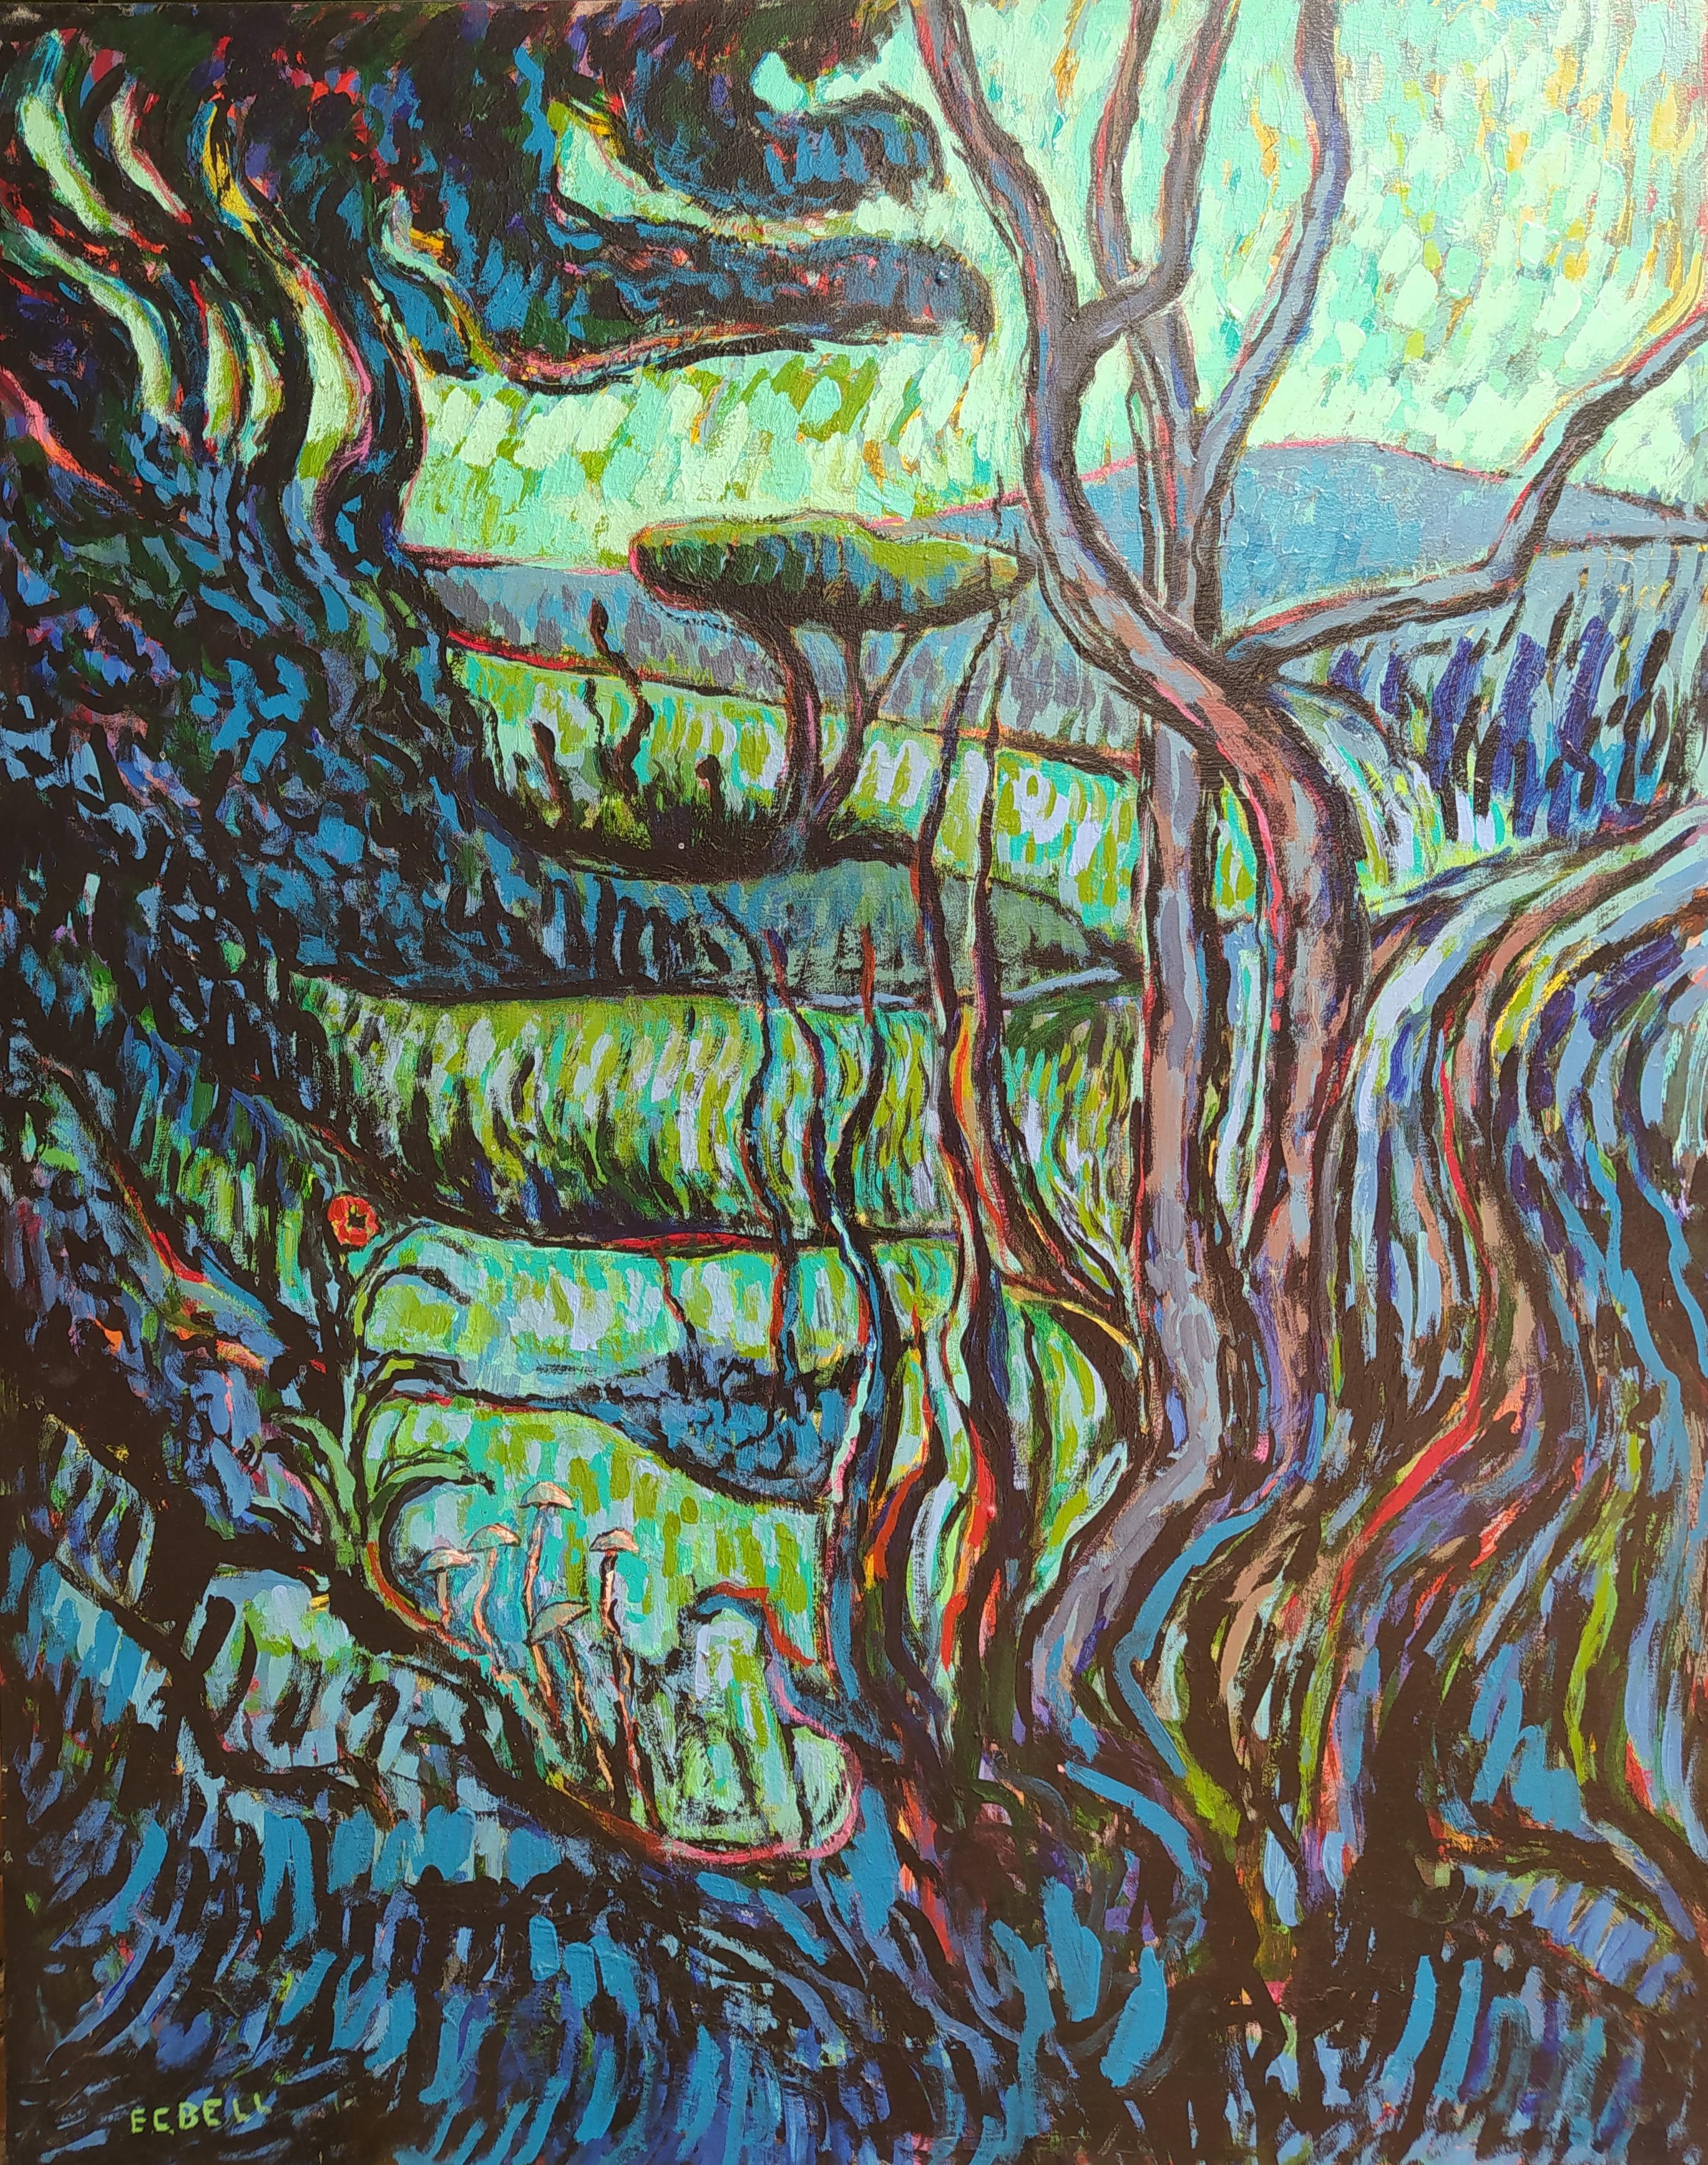 E.C. Bell Landscape Painting - "Landscape with Mushrooms" - Vertical expressionist turquoise landscape.